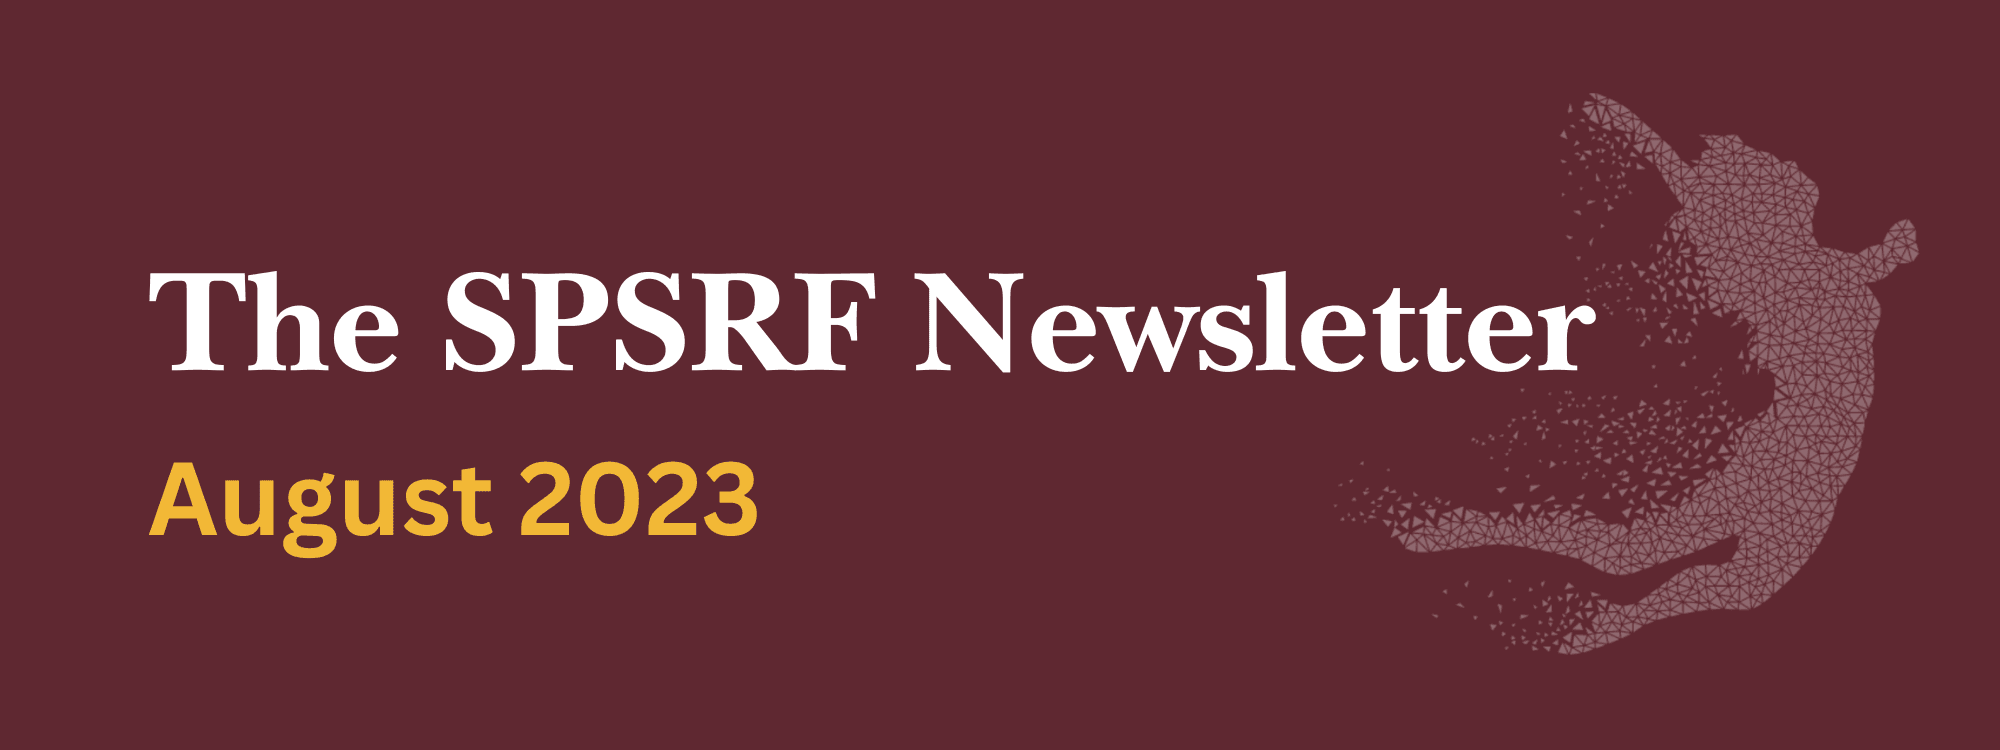 The SPSRF Newsletter August 2023